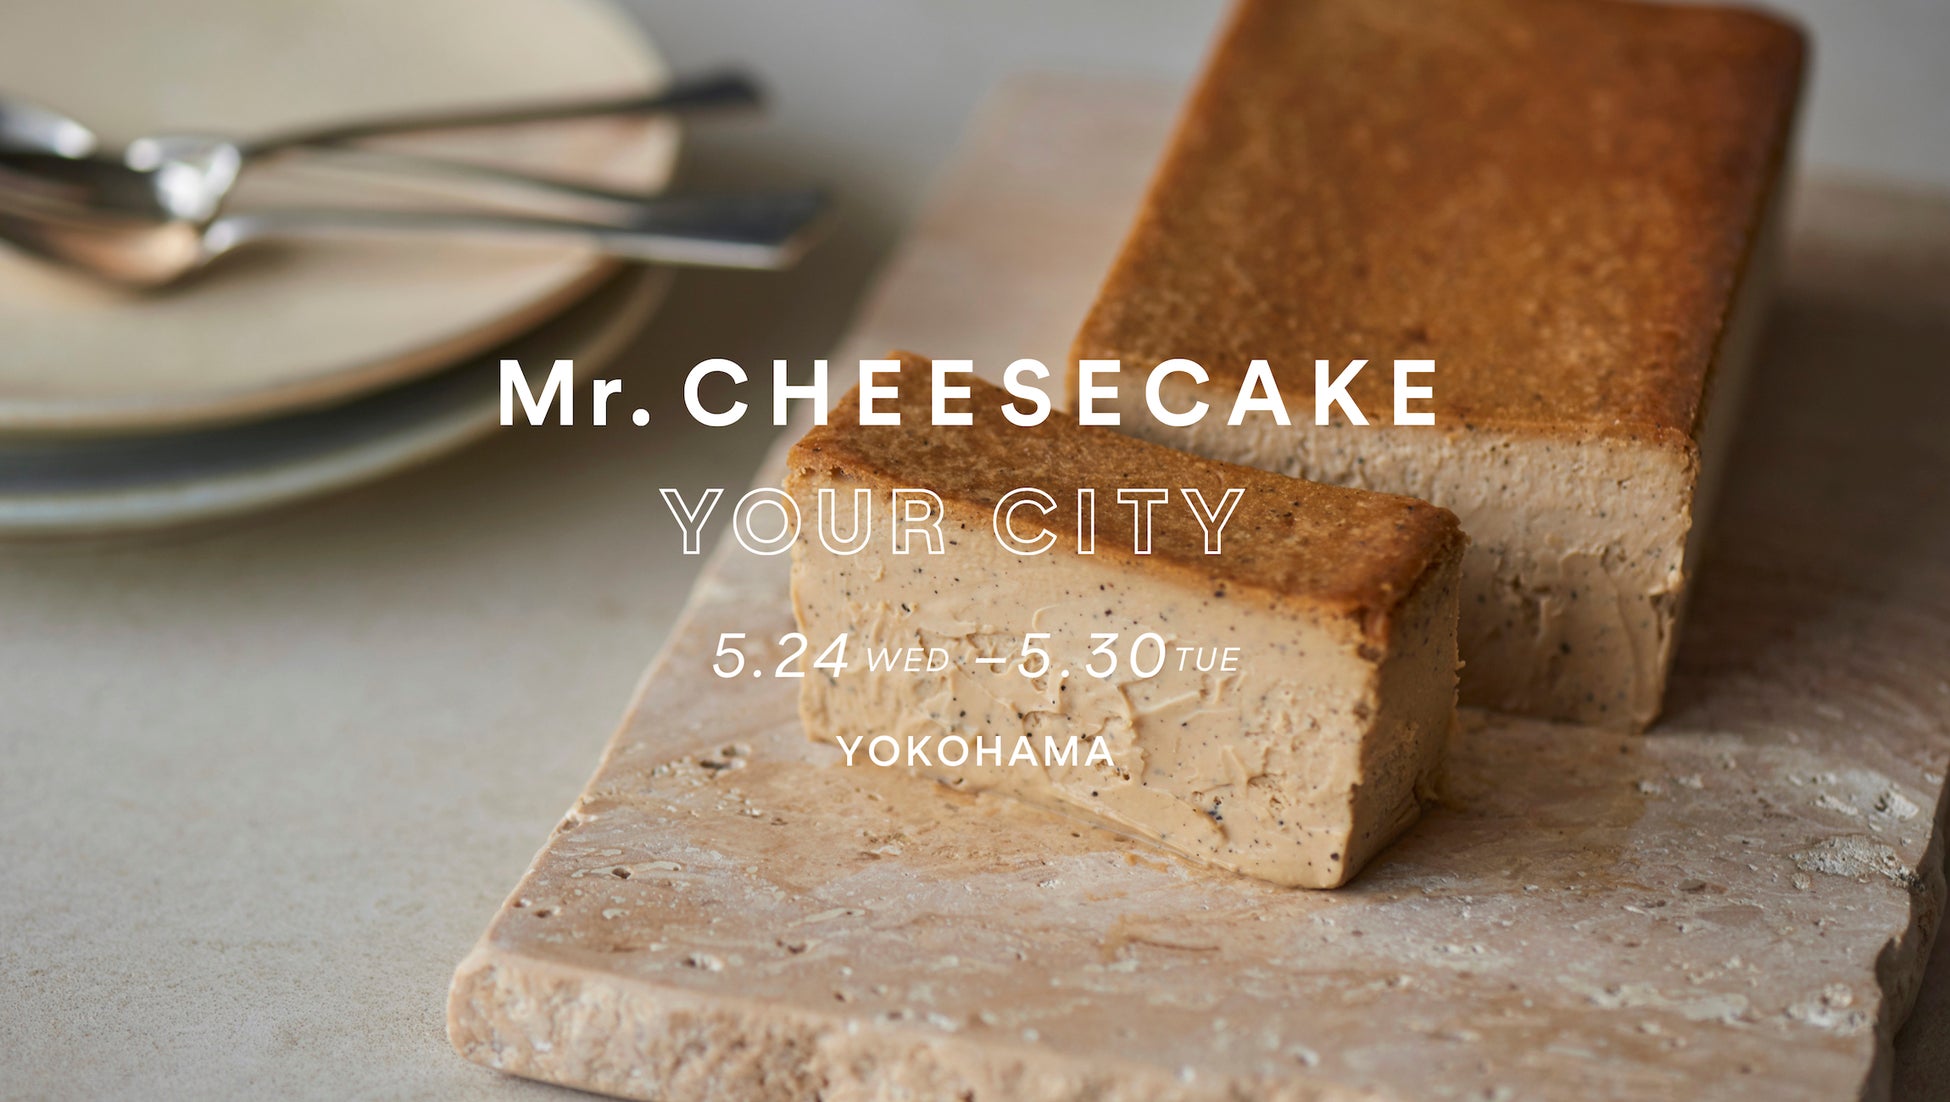 「Mr. CHEESECAKE YOUR CITY」人生最高のチーズケーキのポップアップストアを横浜で再び開催！店舗限定フレーバー「Mr. CHEESECAKE Caramel」が初登場